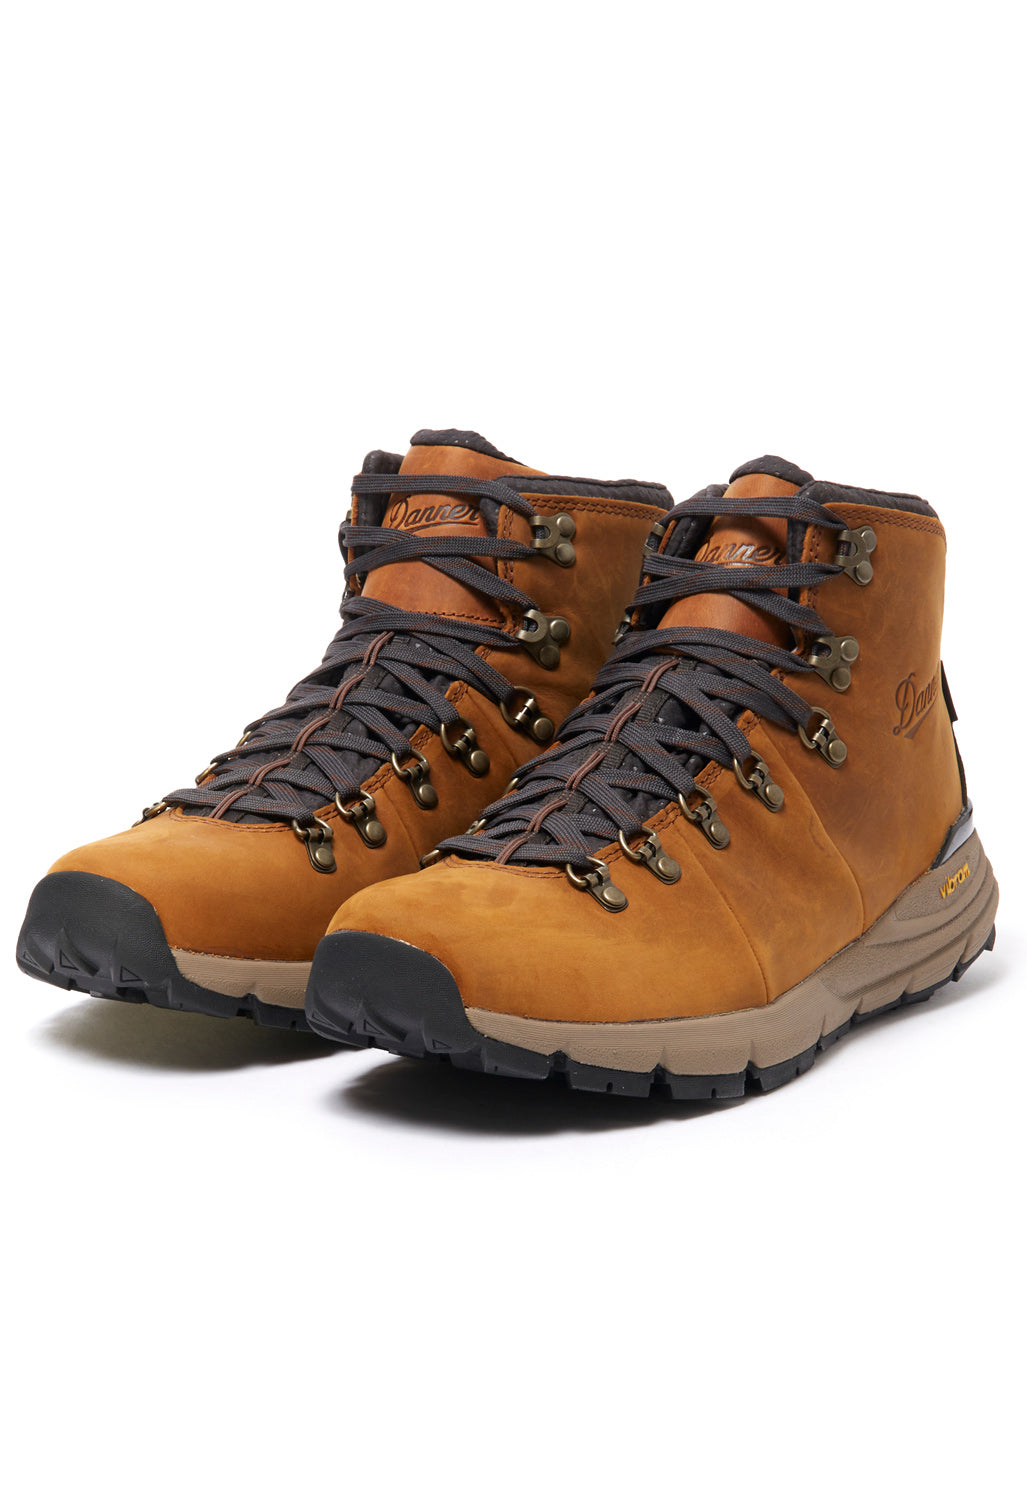 Danner Mountain 600 4.5" Men's Boots - Rich Brown